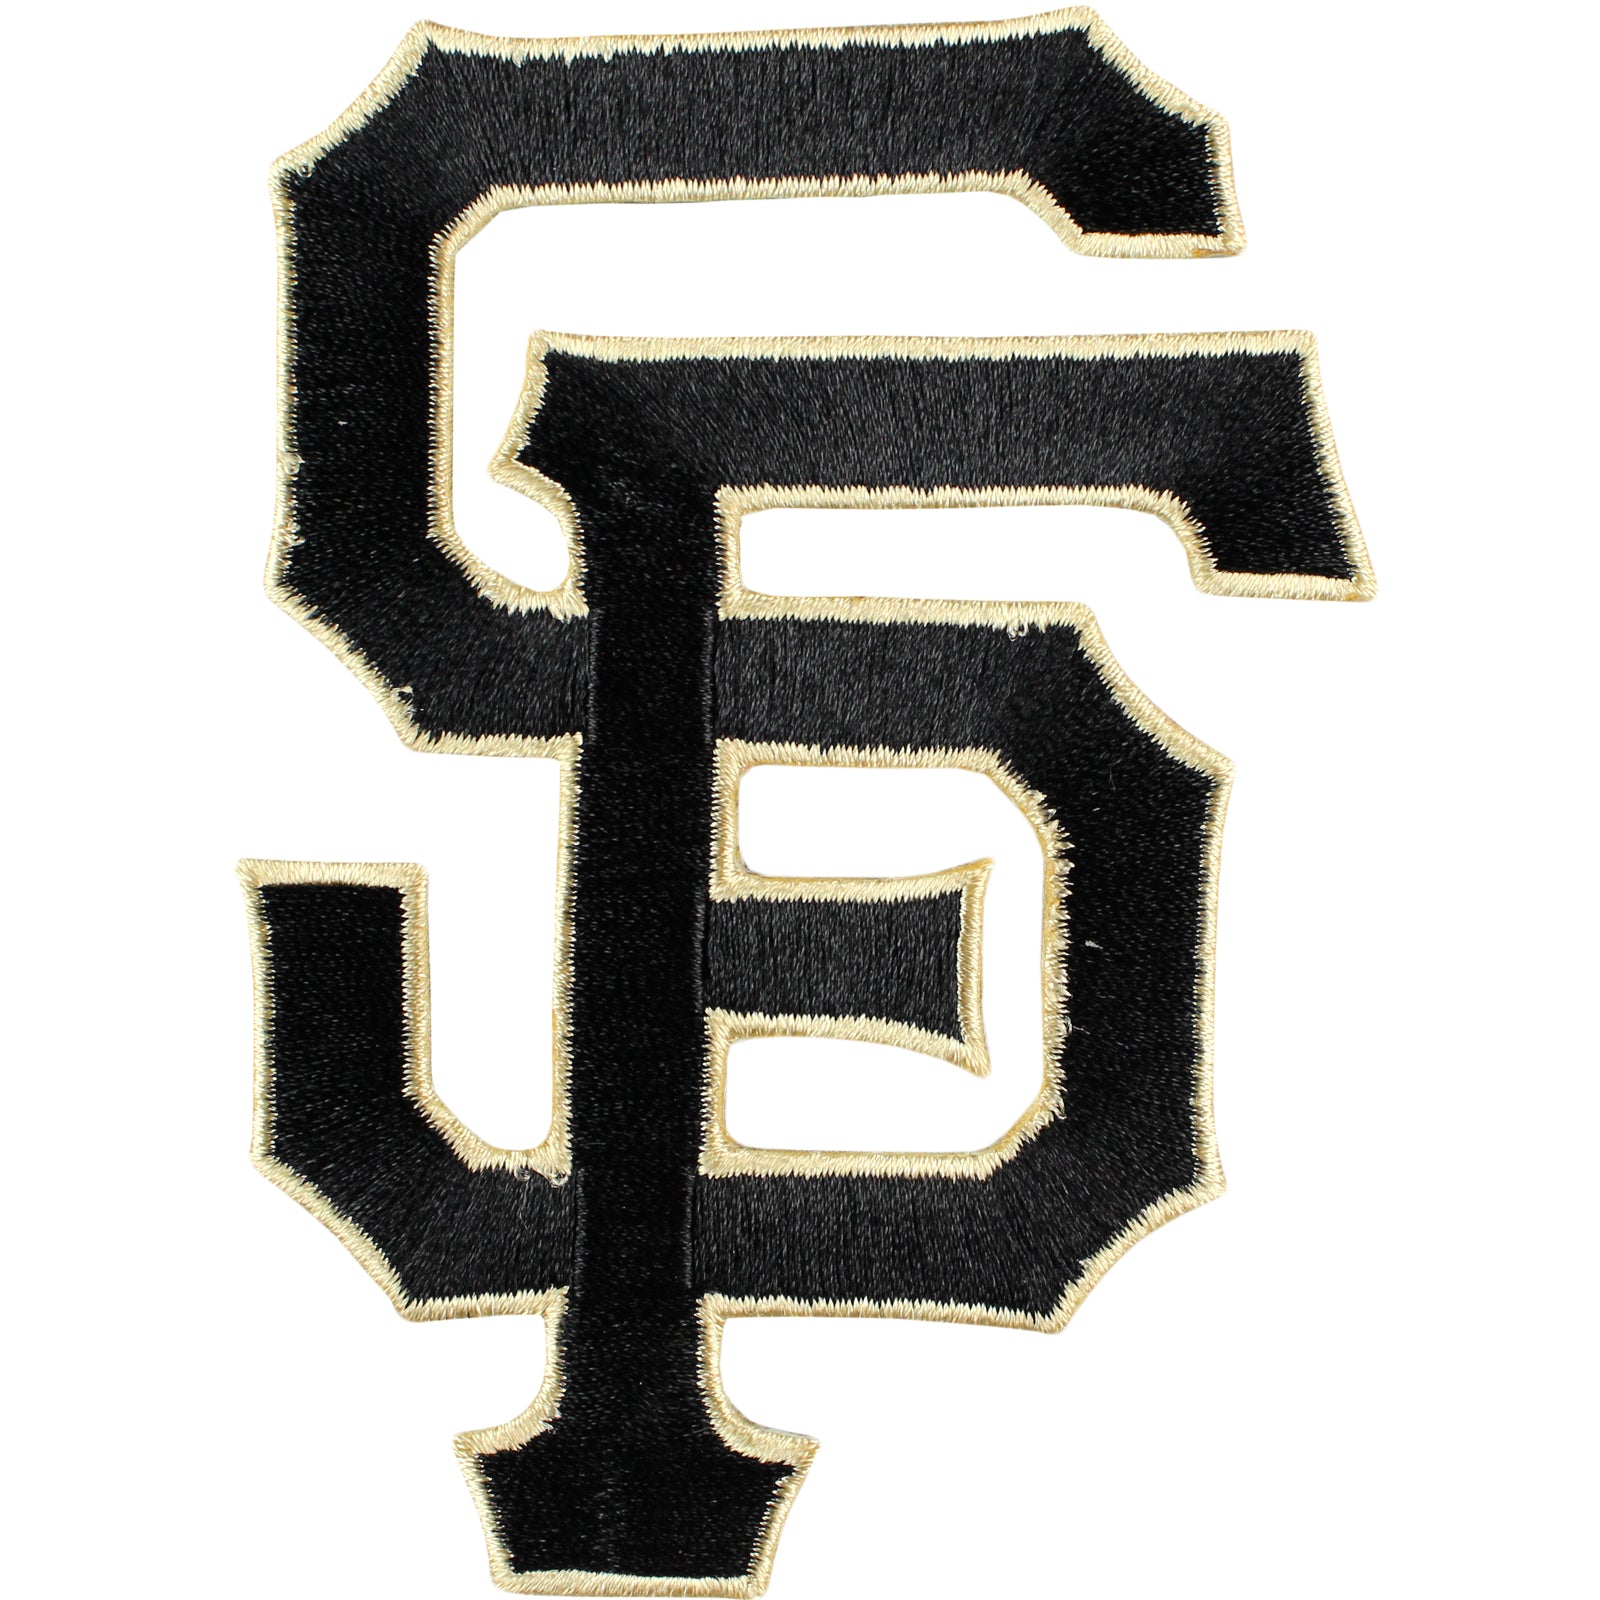 Black San Francisco Giants SF Secondary Logo Patch